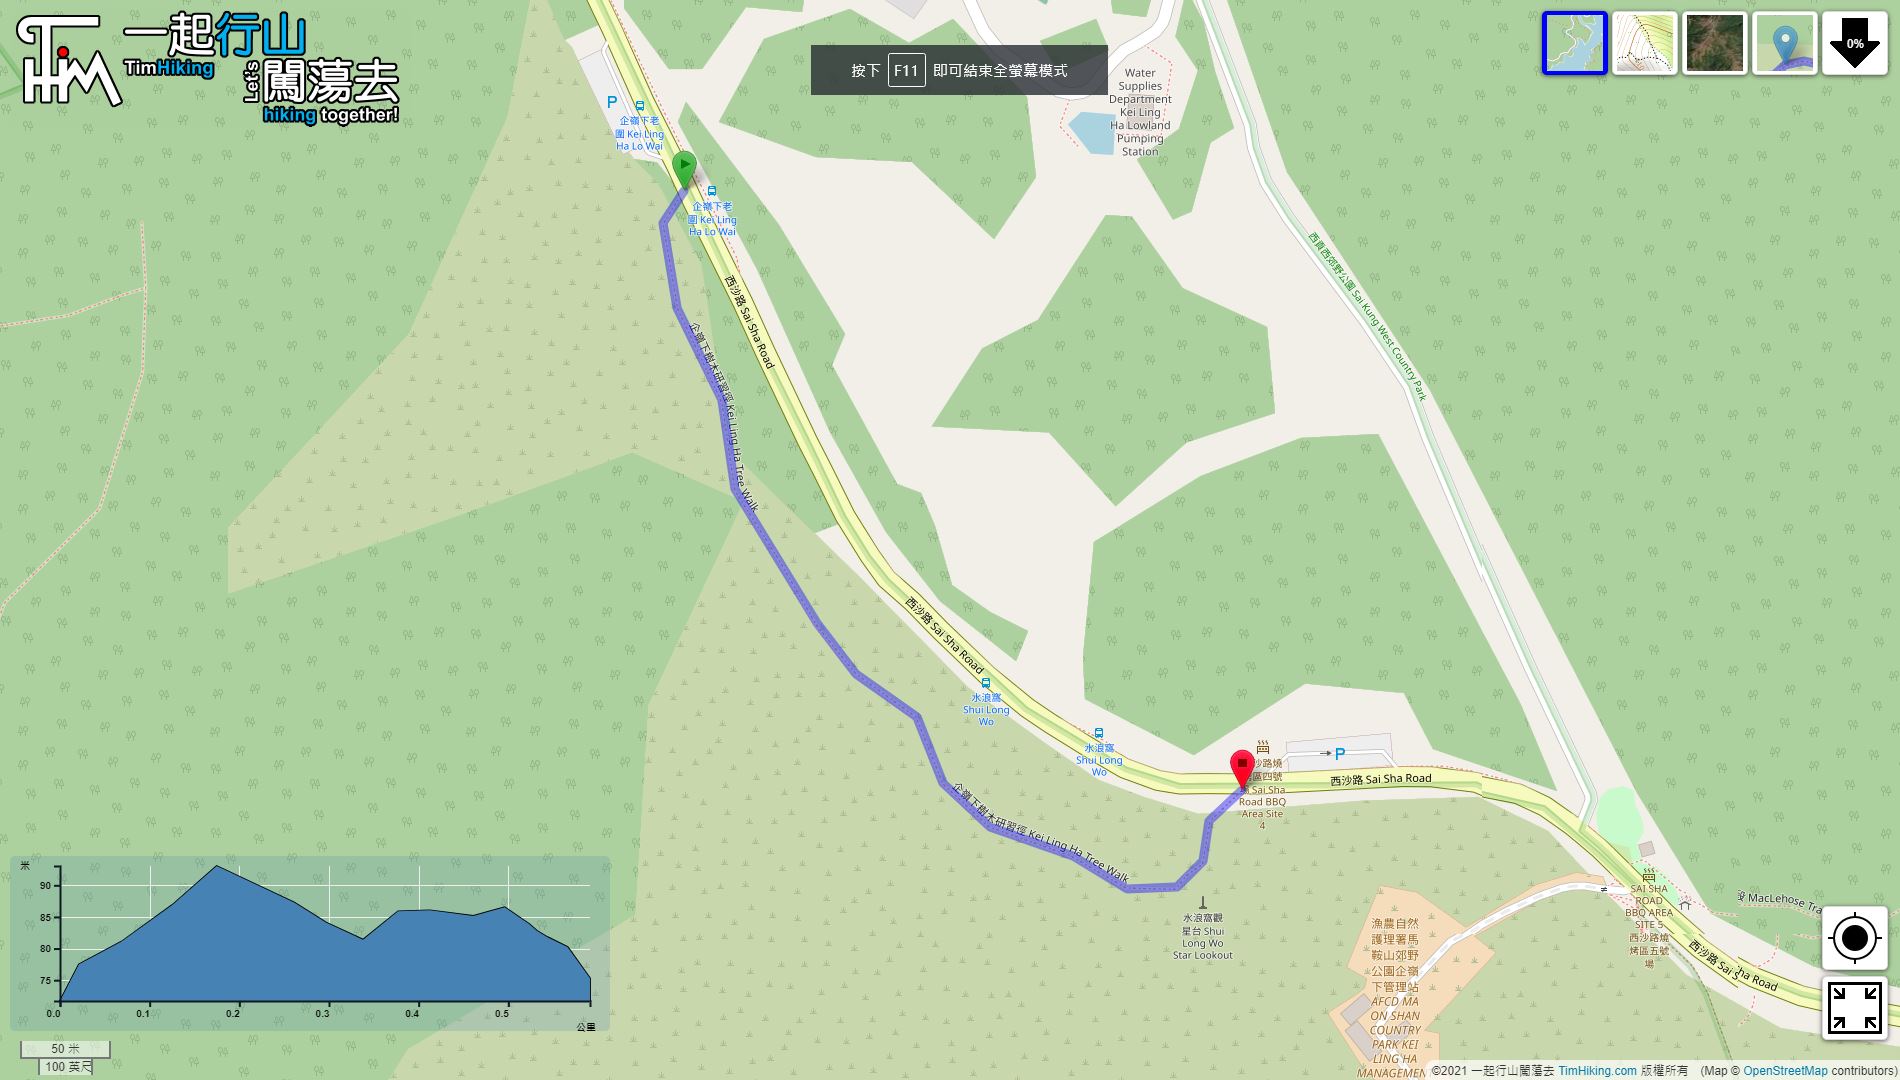 「Kei Ling Ha Tree Walk」路線Map